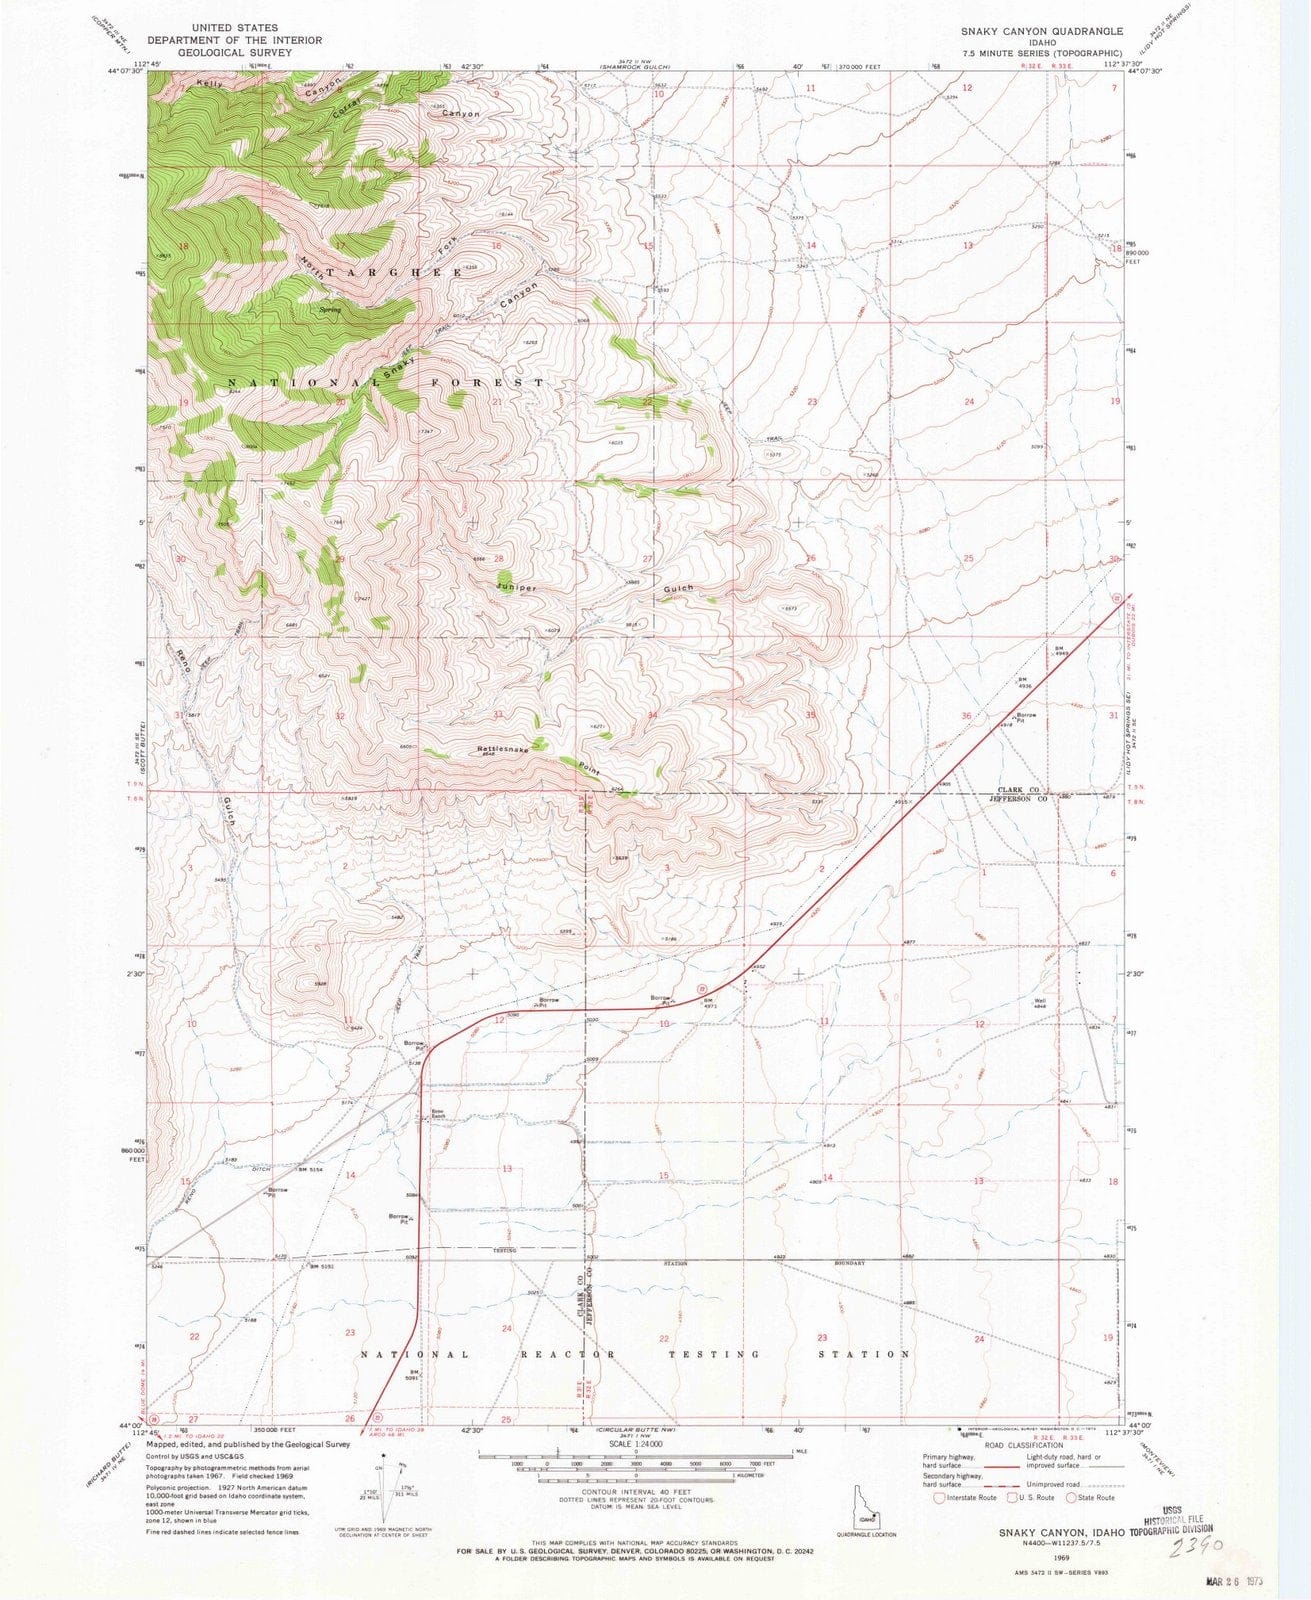 1969 Snaky Canyon, ID - Idaho - USGS Topographic Map